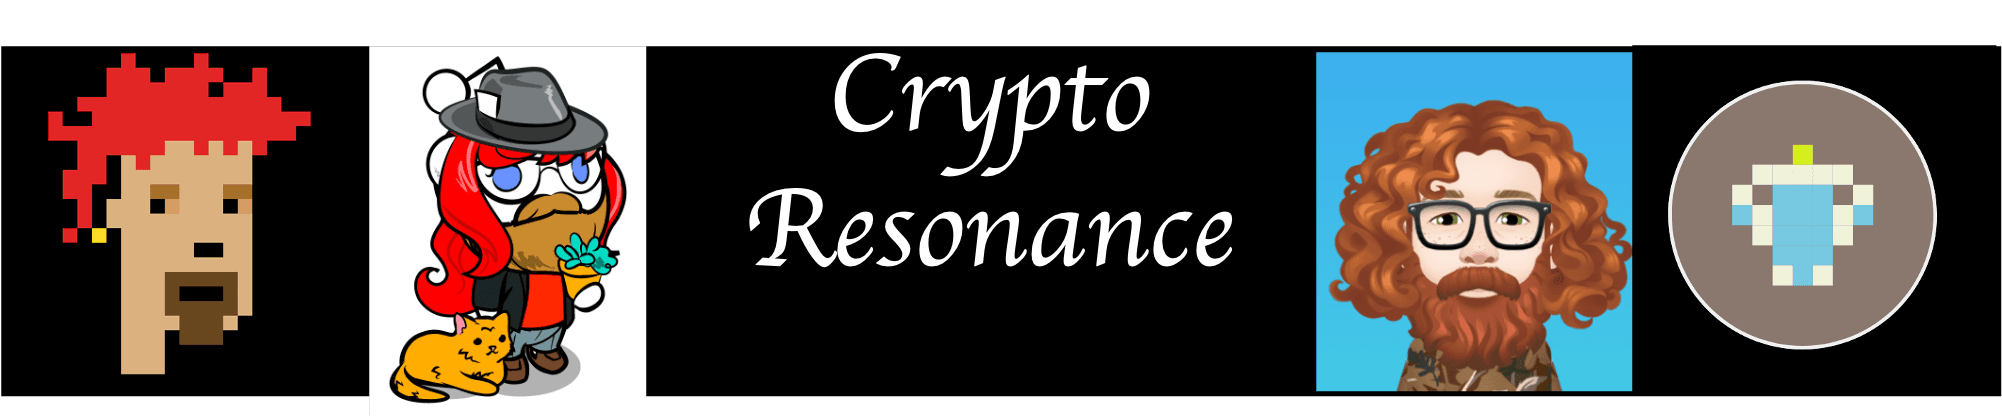 CryptoResonance バナー